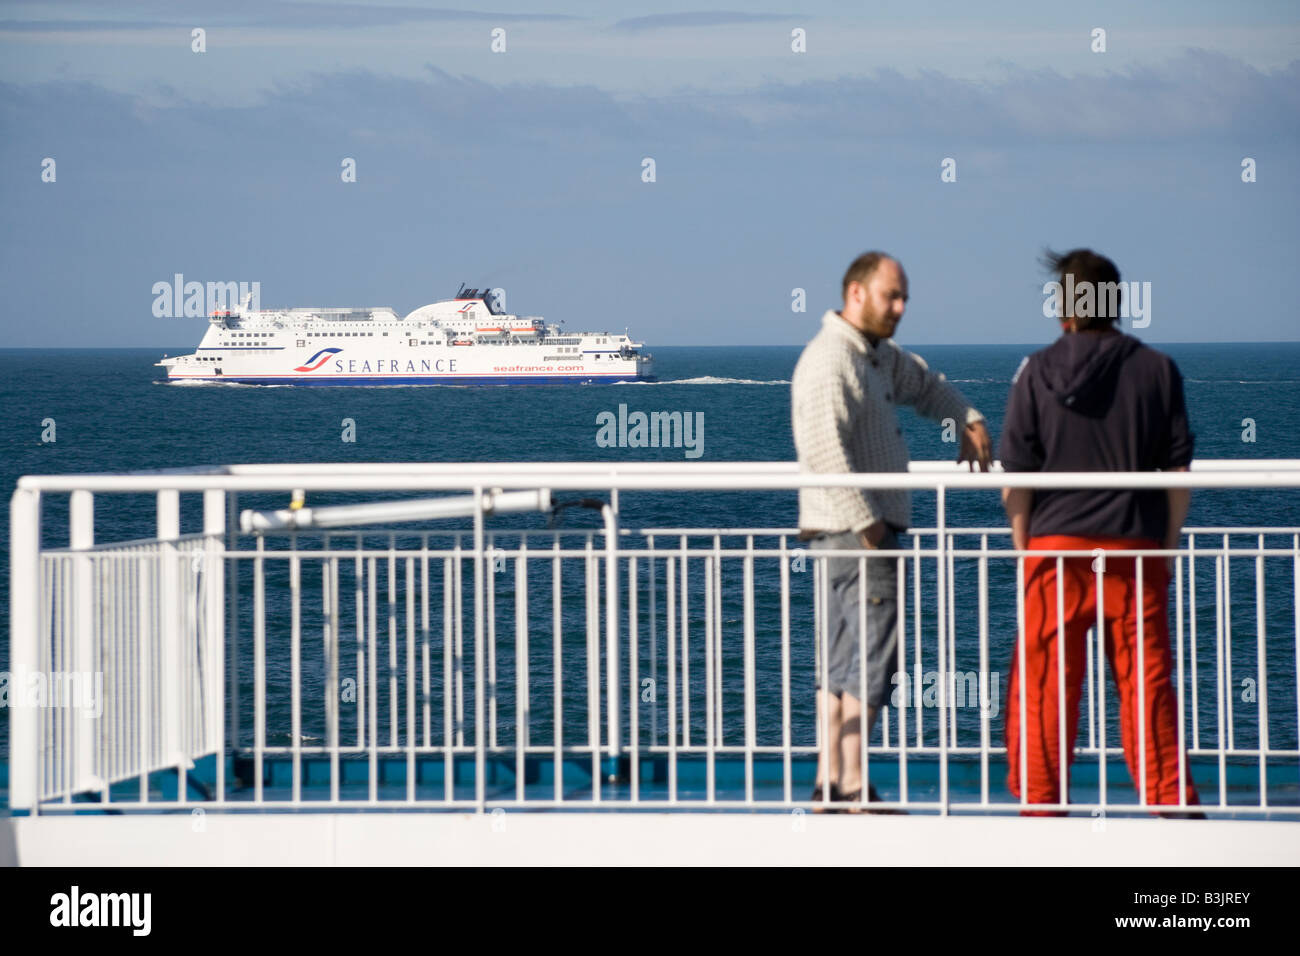 Passeggeri sui traghetti di canale, seafrance ferry in background. Foto Stock